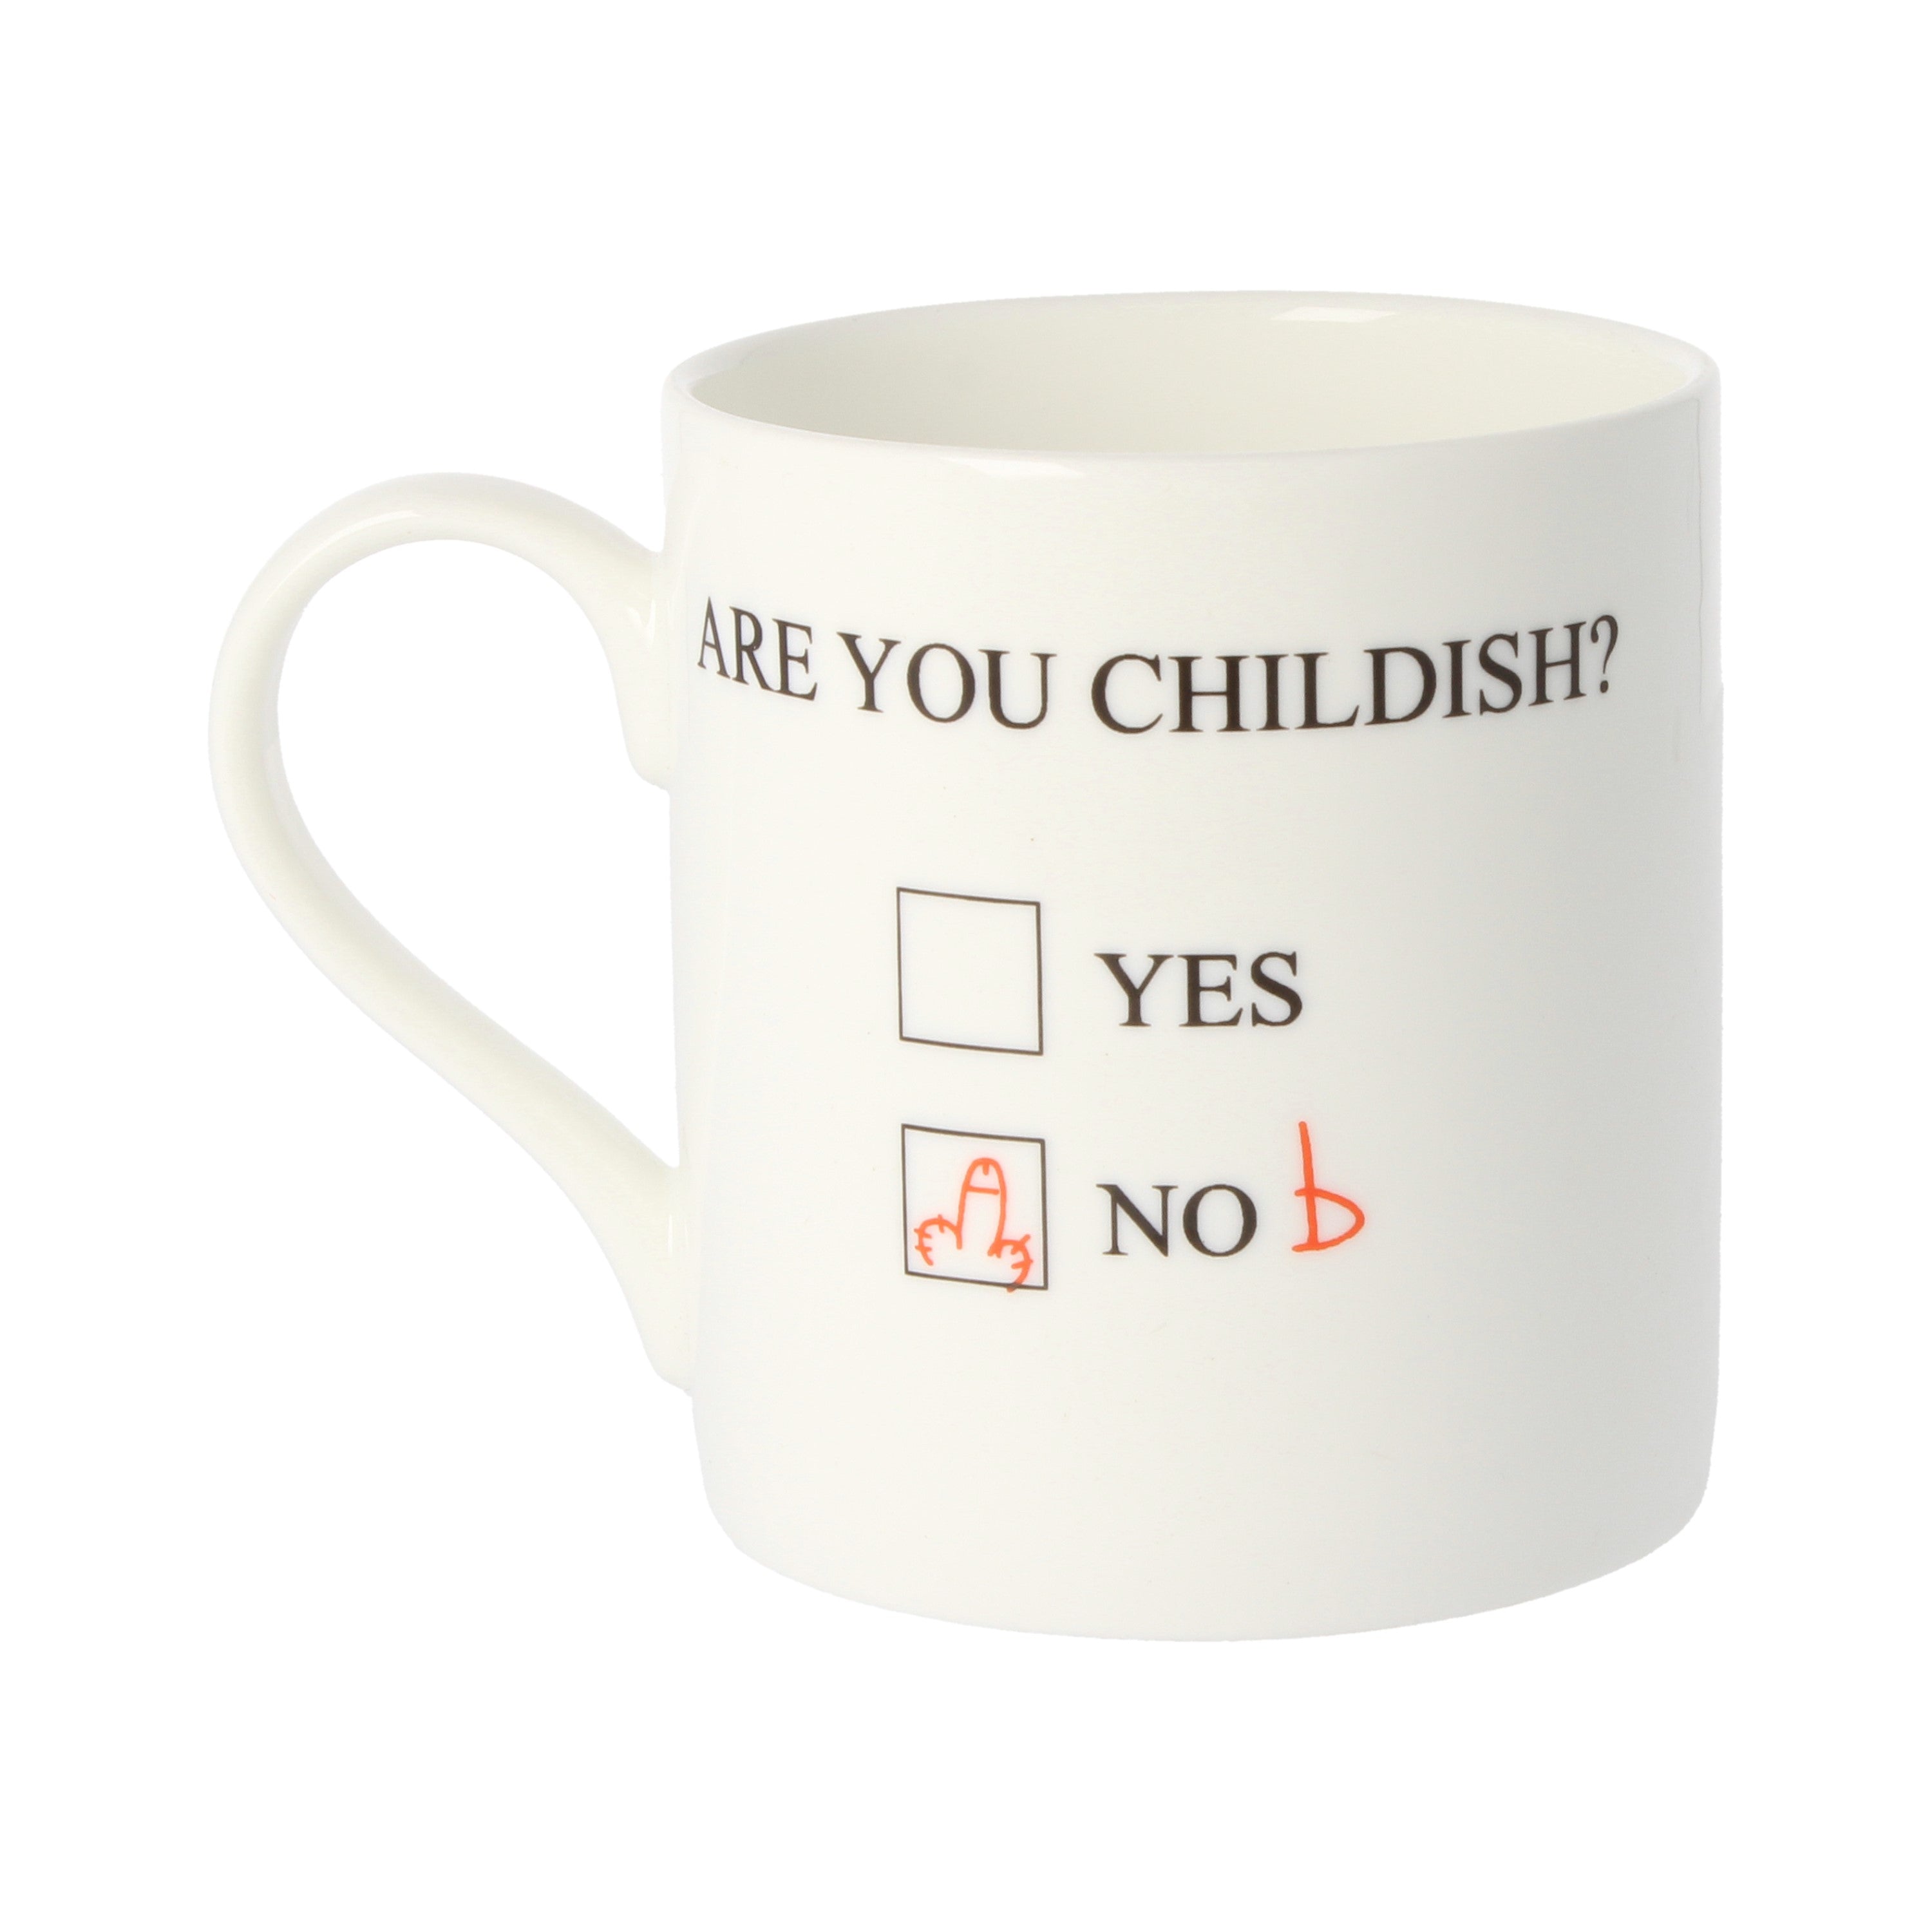 Are You Childish Mug